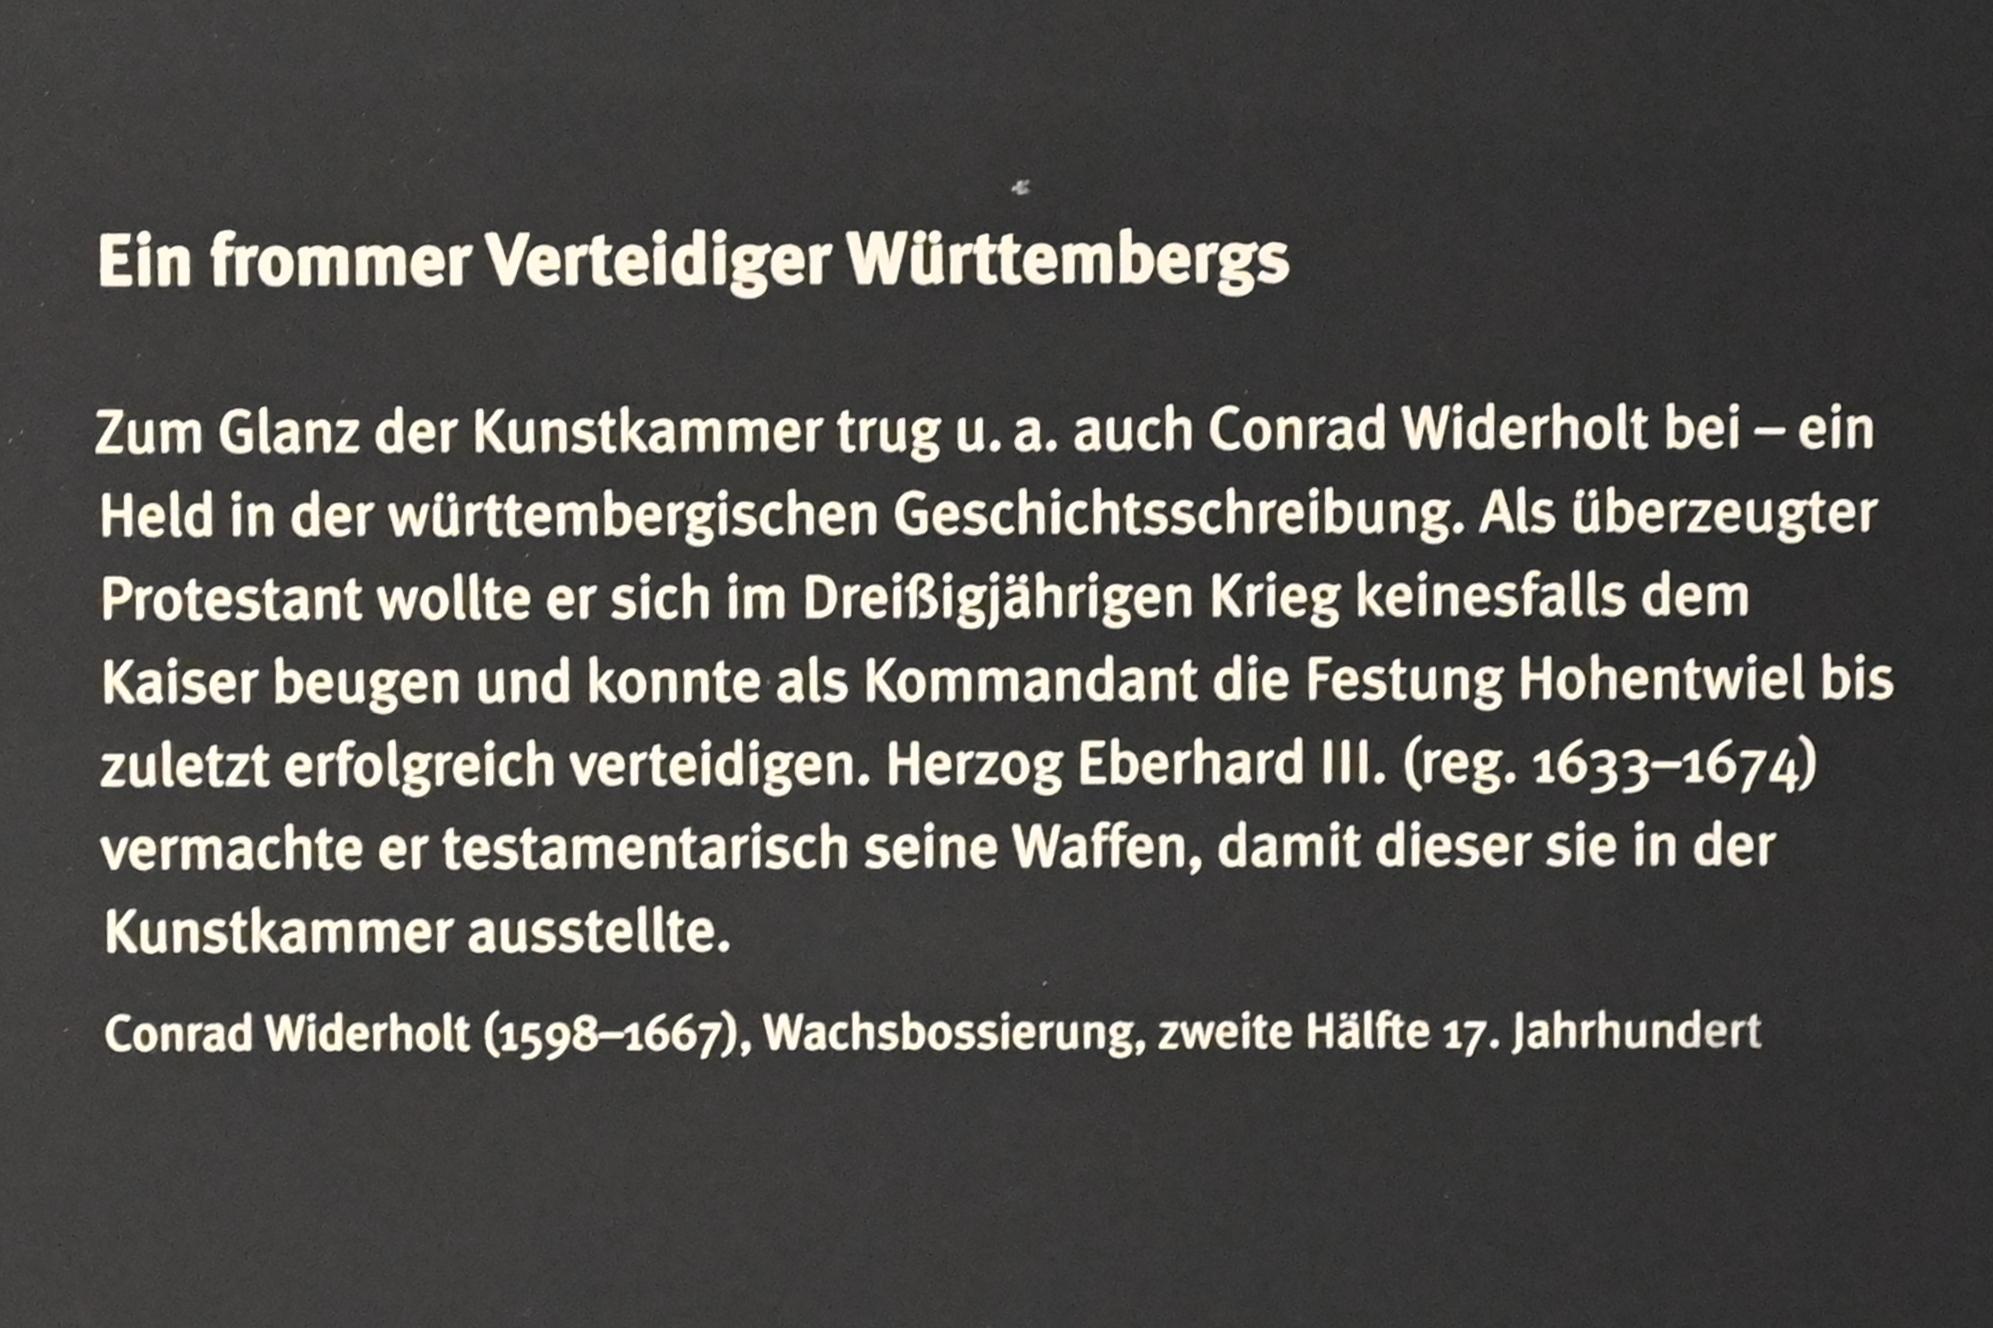 Konrad Widerholt (1598-1667), Stuttgart, Landesmuseum Württemberg, Kunstkammer, 2. Hälfte 17. Jhd., Bild 2/2